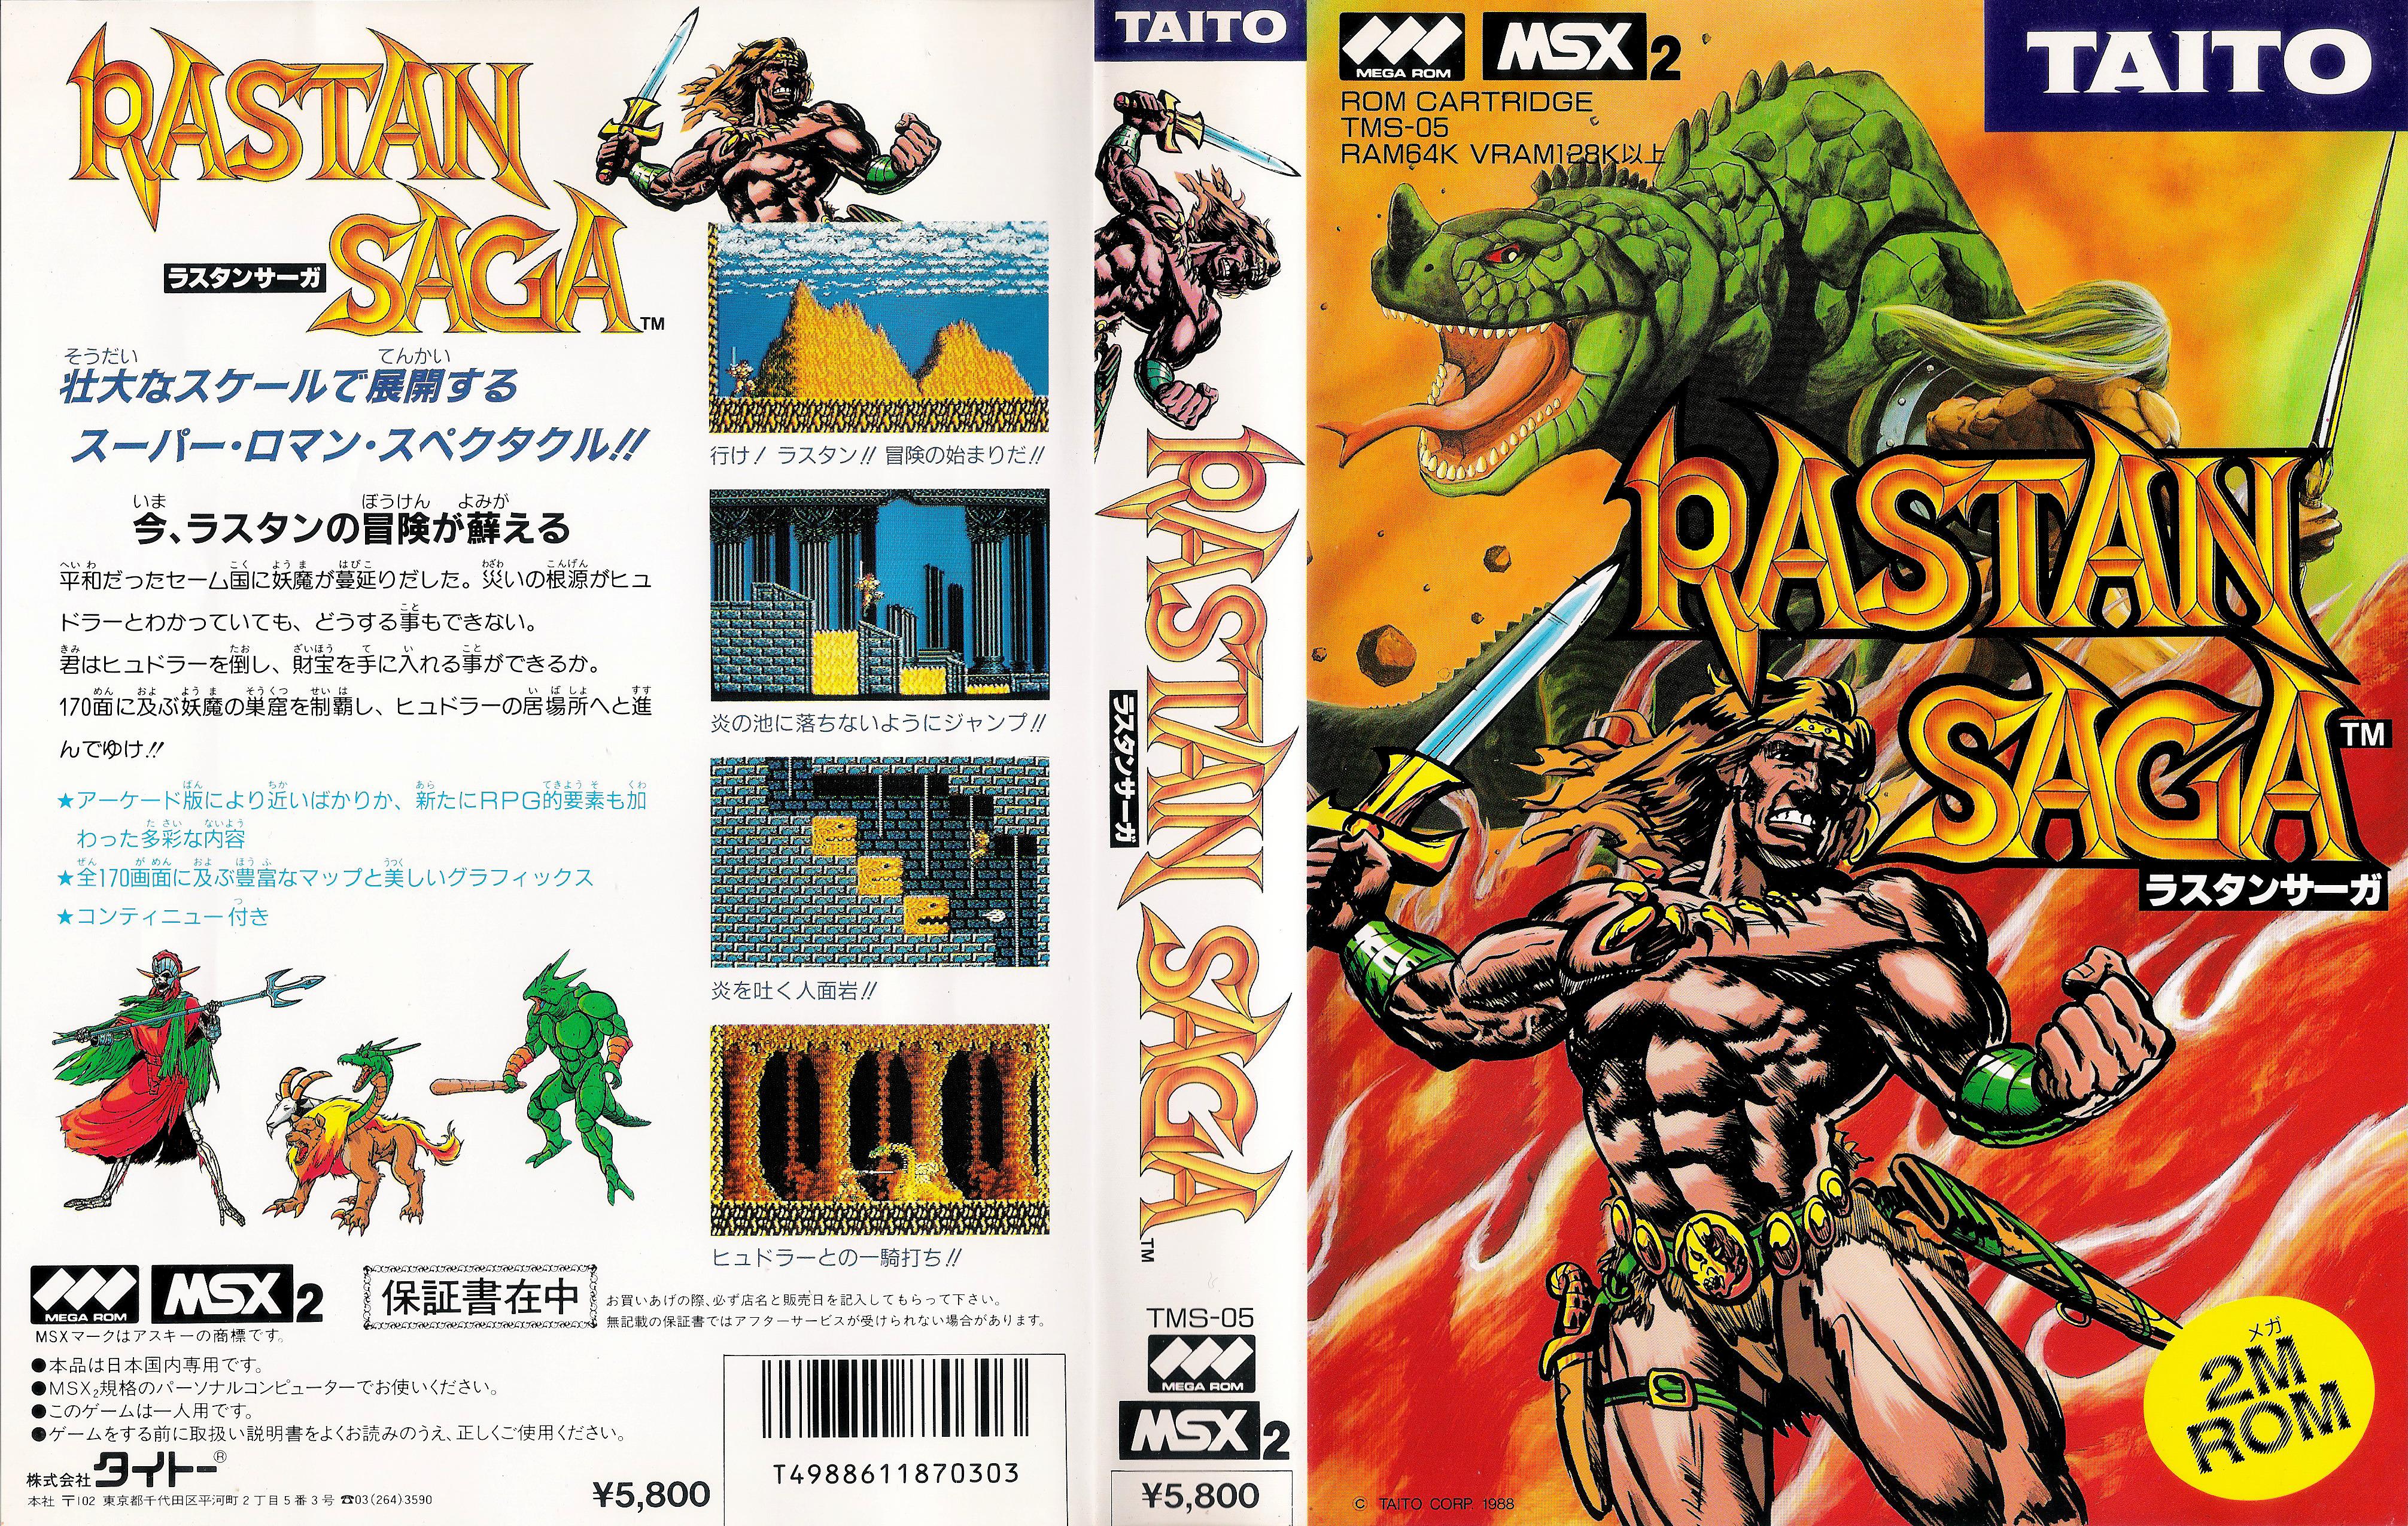 Rastan Saga (1988, MSX2, TAITO) | Releases | Generation MSX